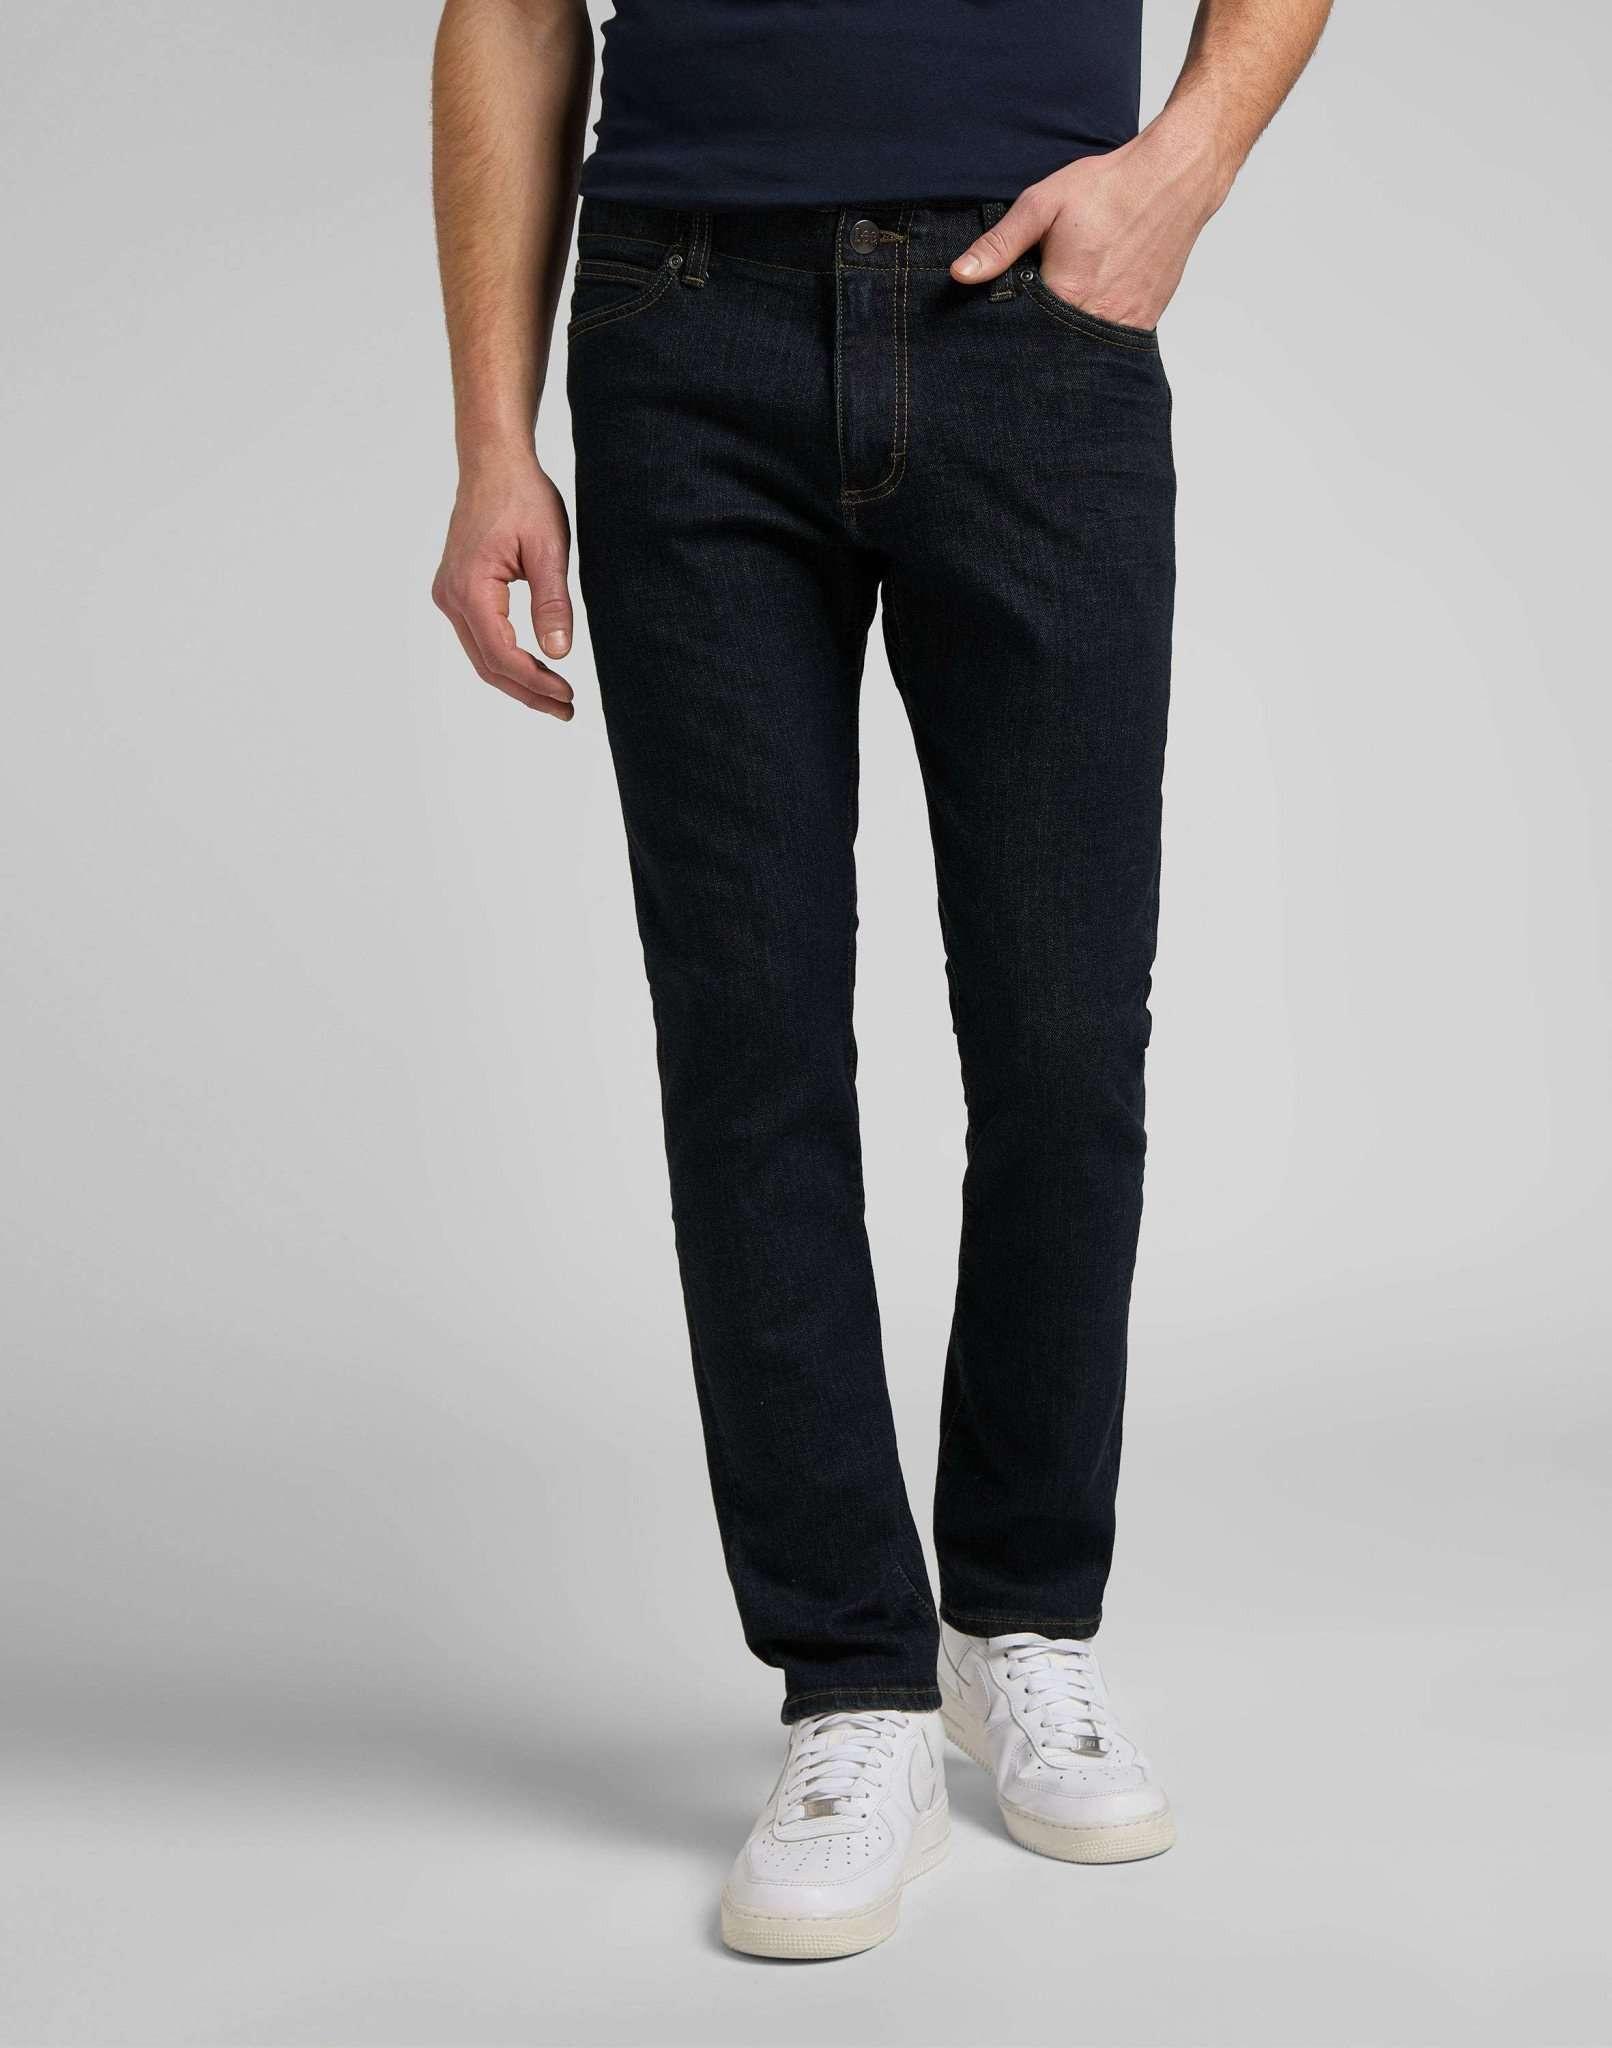 Jeans Skinny Fit Xm Herren Blau Denim L30/W31 von Lee